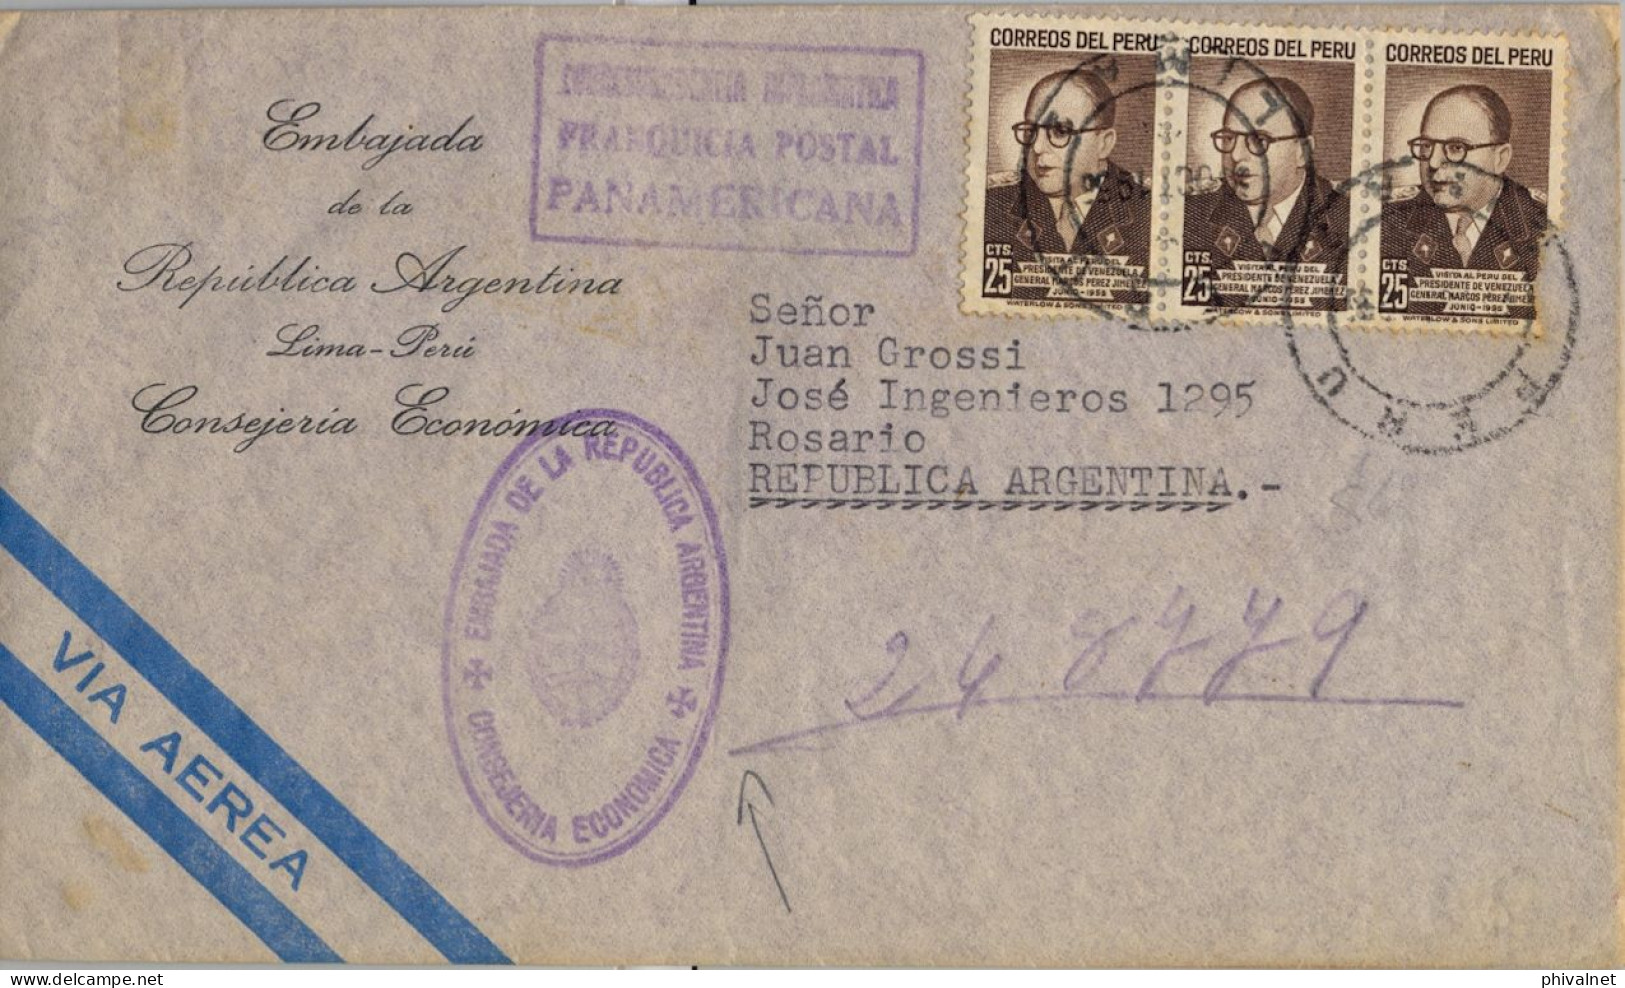 1956 PERÚ , CORREO CONSULAR , CORRESPONDENCIA DIPLOMÁTICA , FRANQUICIA POSTAL PANAMERICANA , CONSEJERIA ECONÓMICA - Pérou